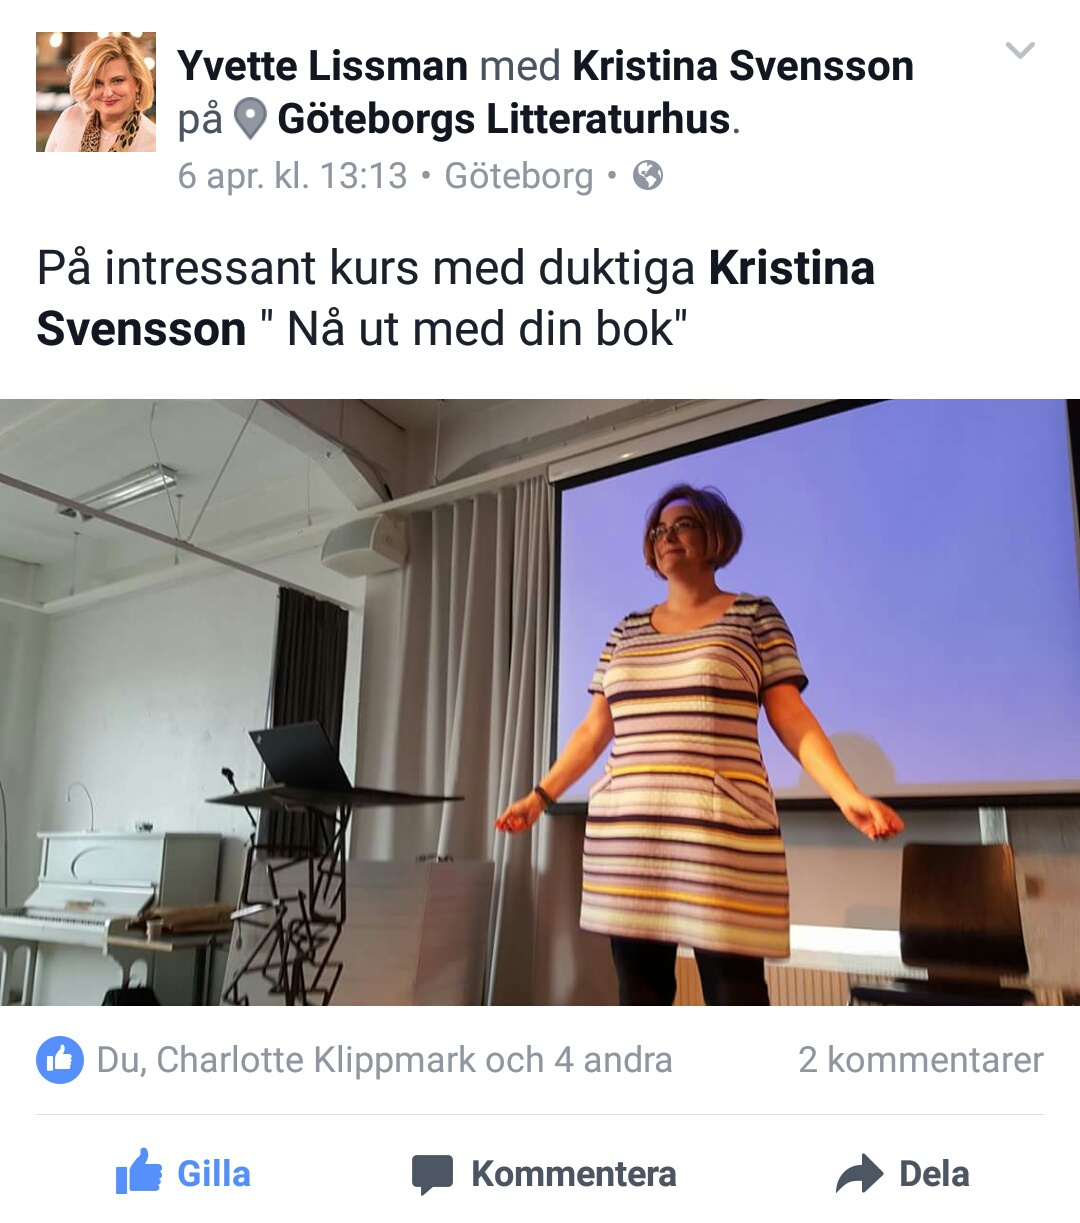 Kristina Svensson kurs foto Yvette Lissman